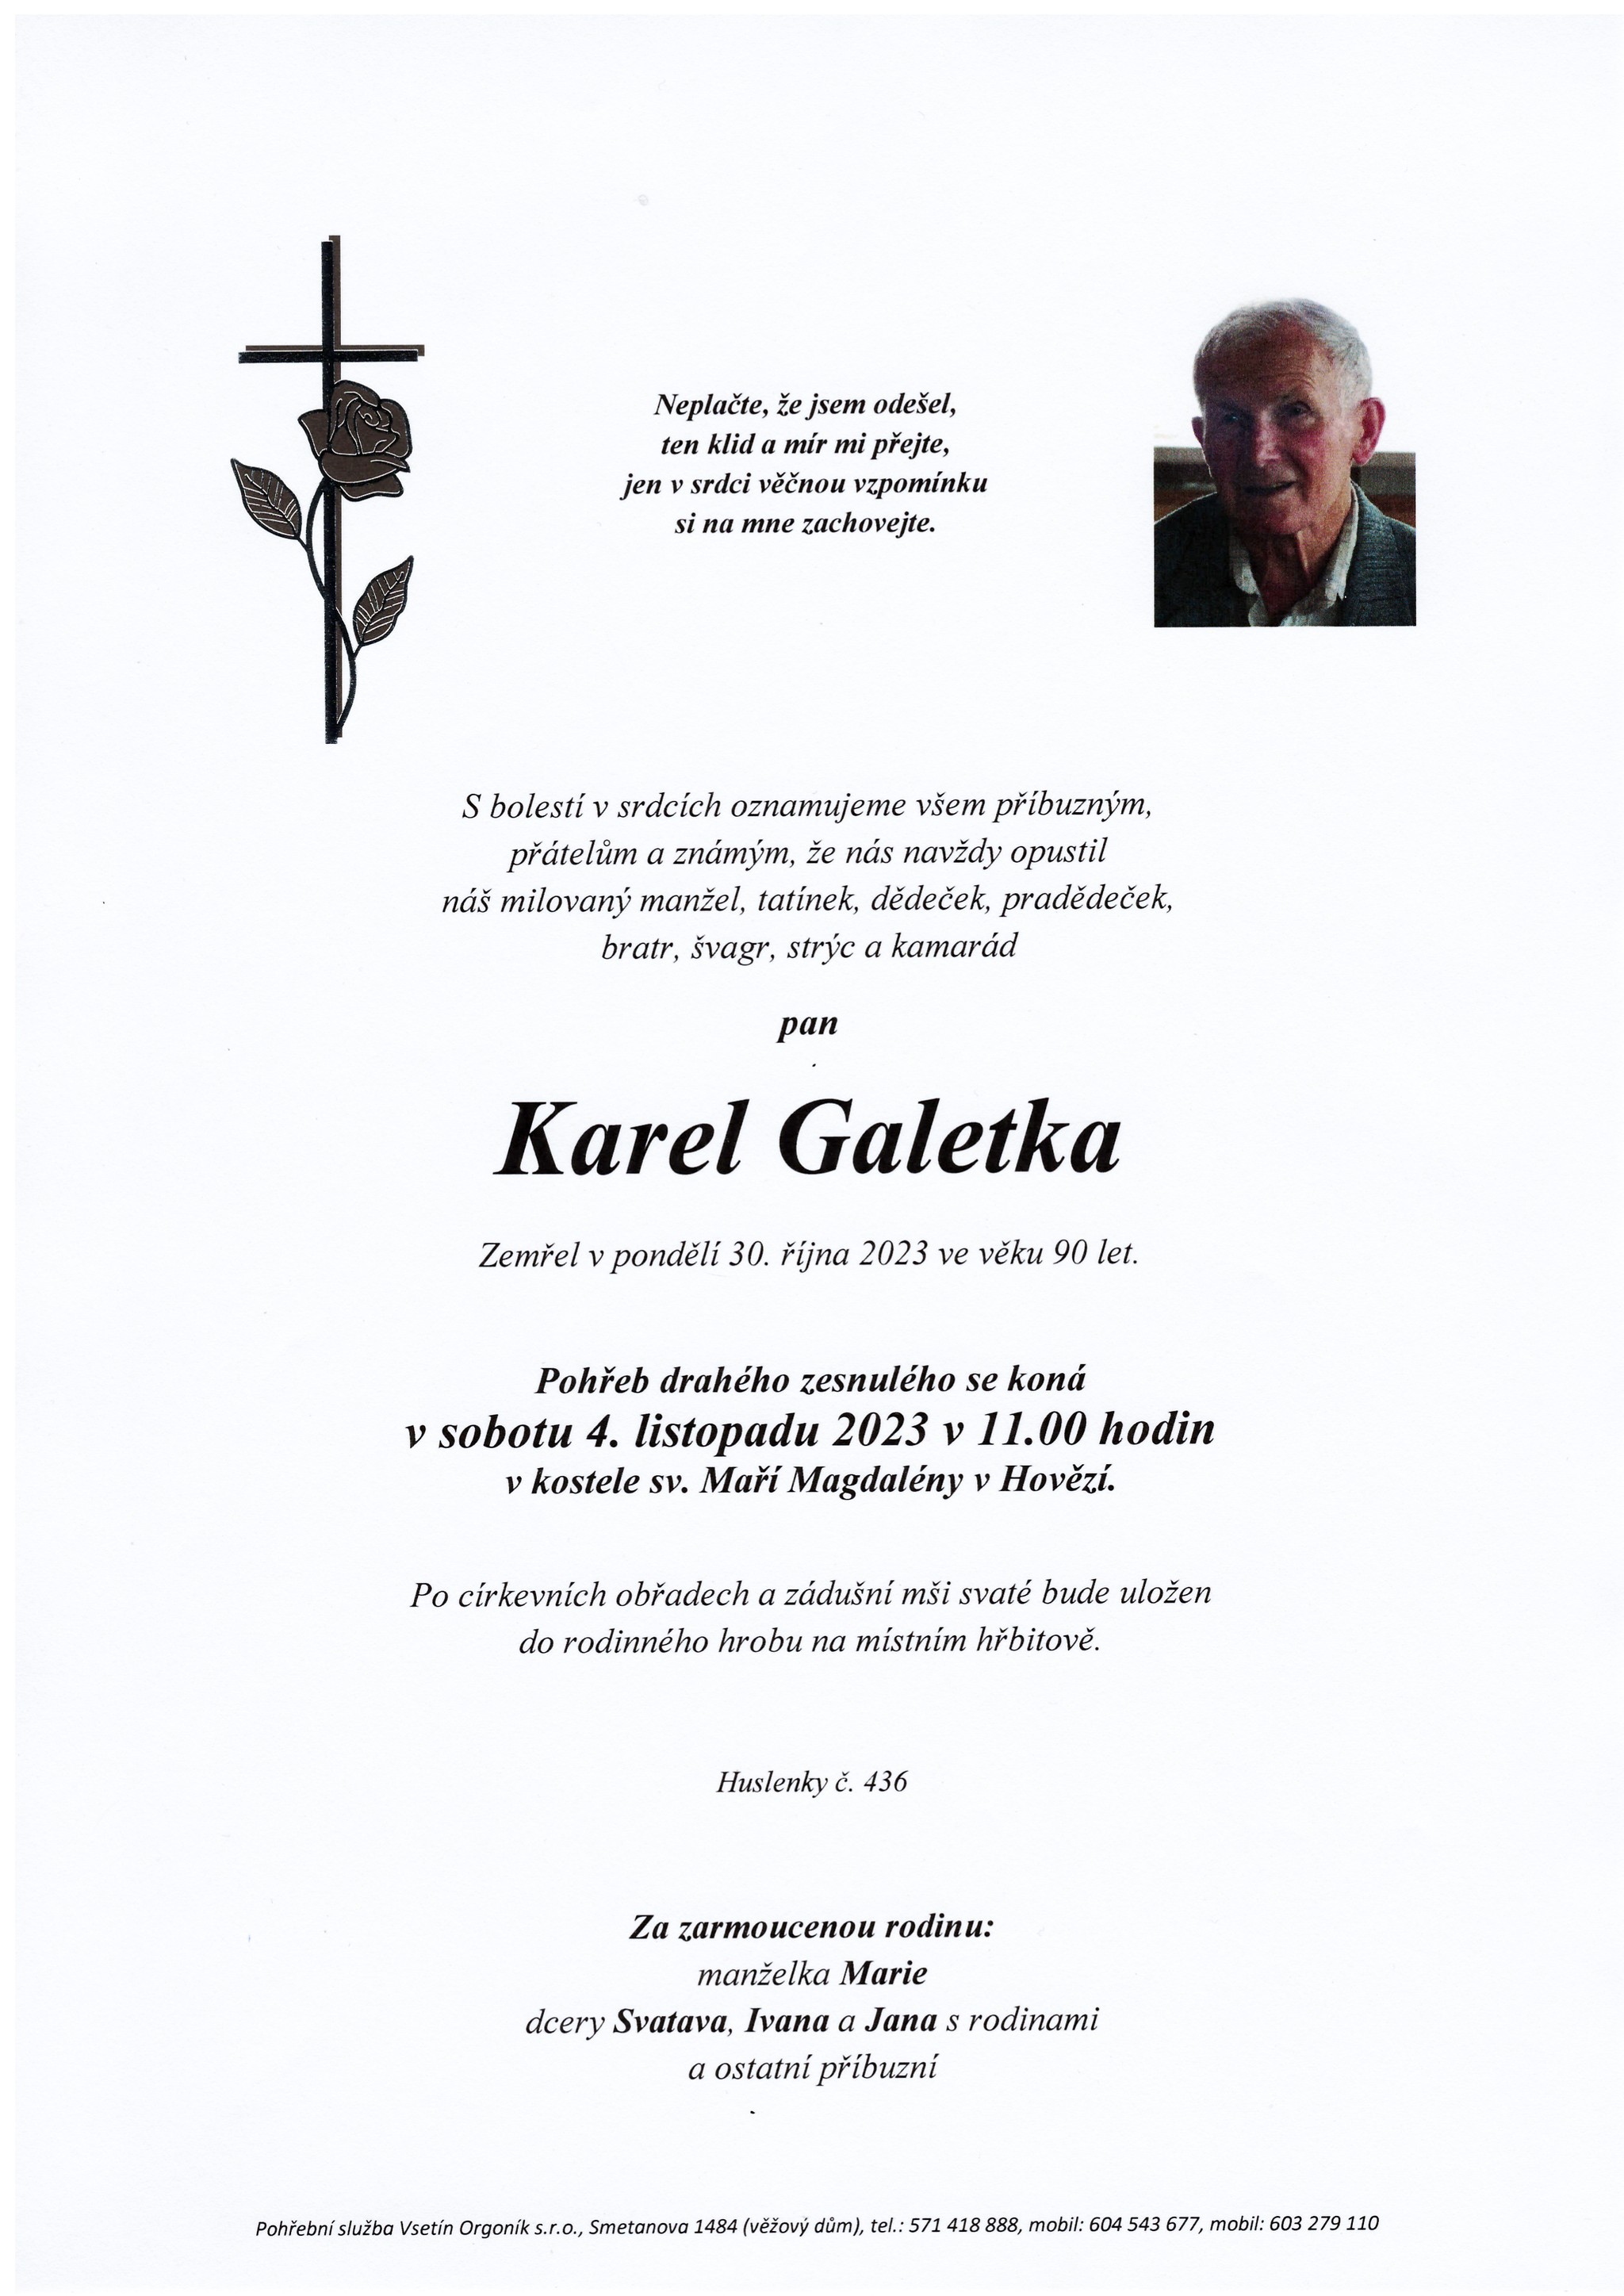 Karel Galetka